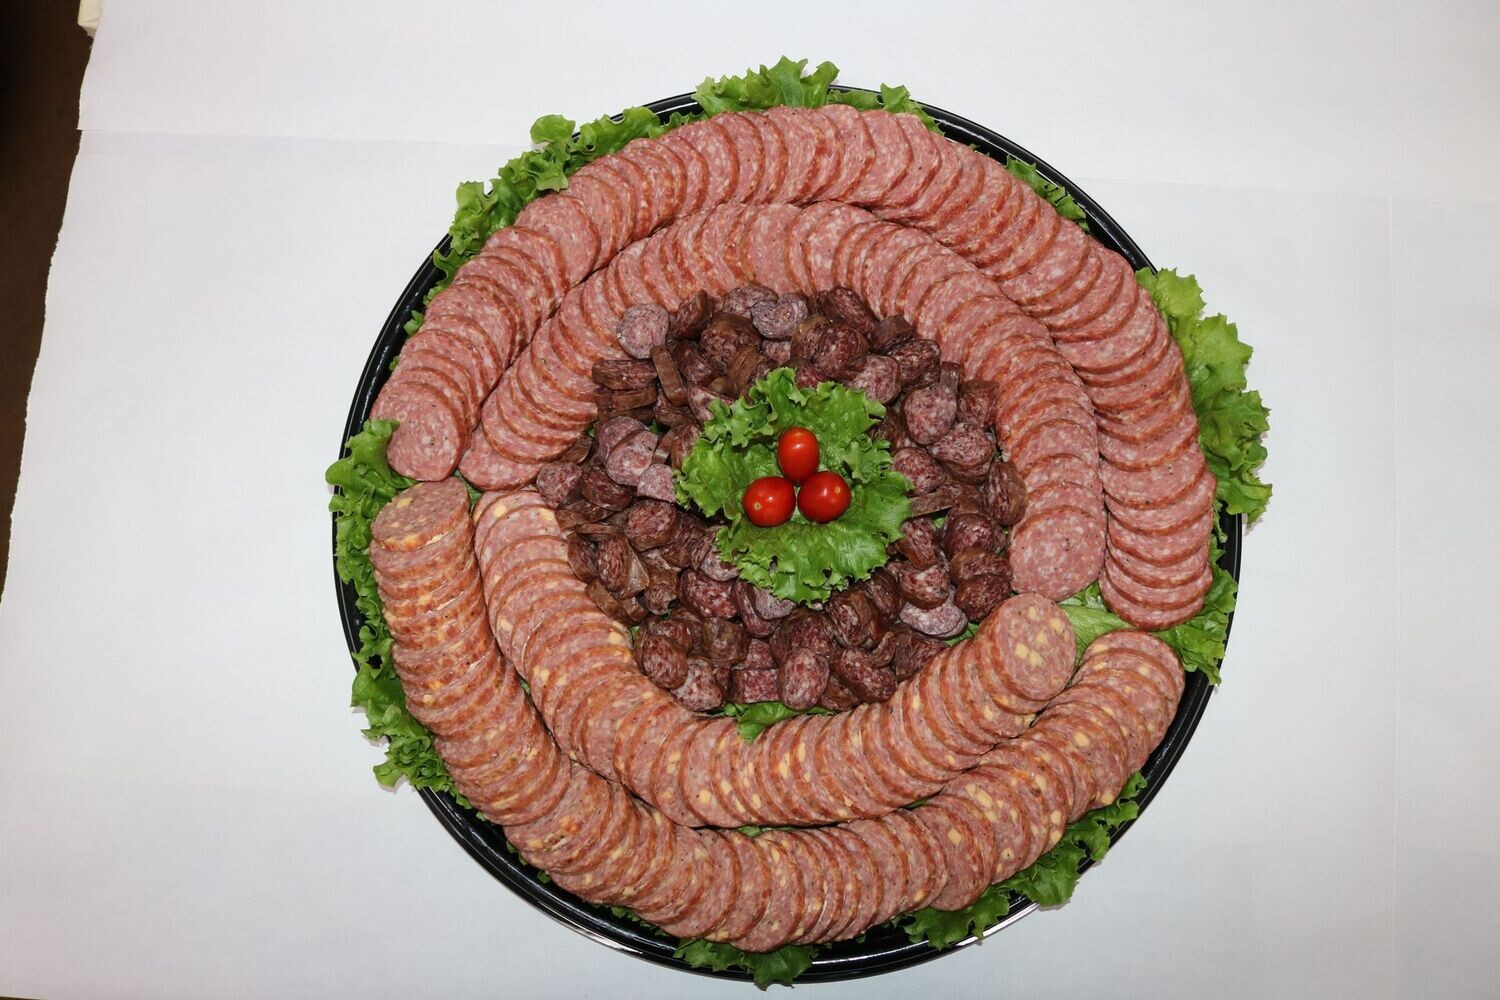 Pruski's Summer Sausage & Cheese Tray [Large]